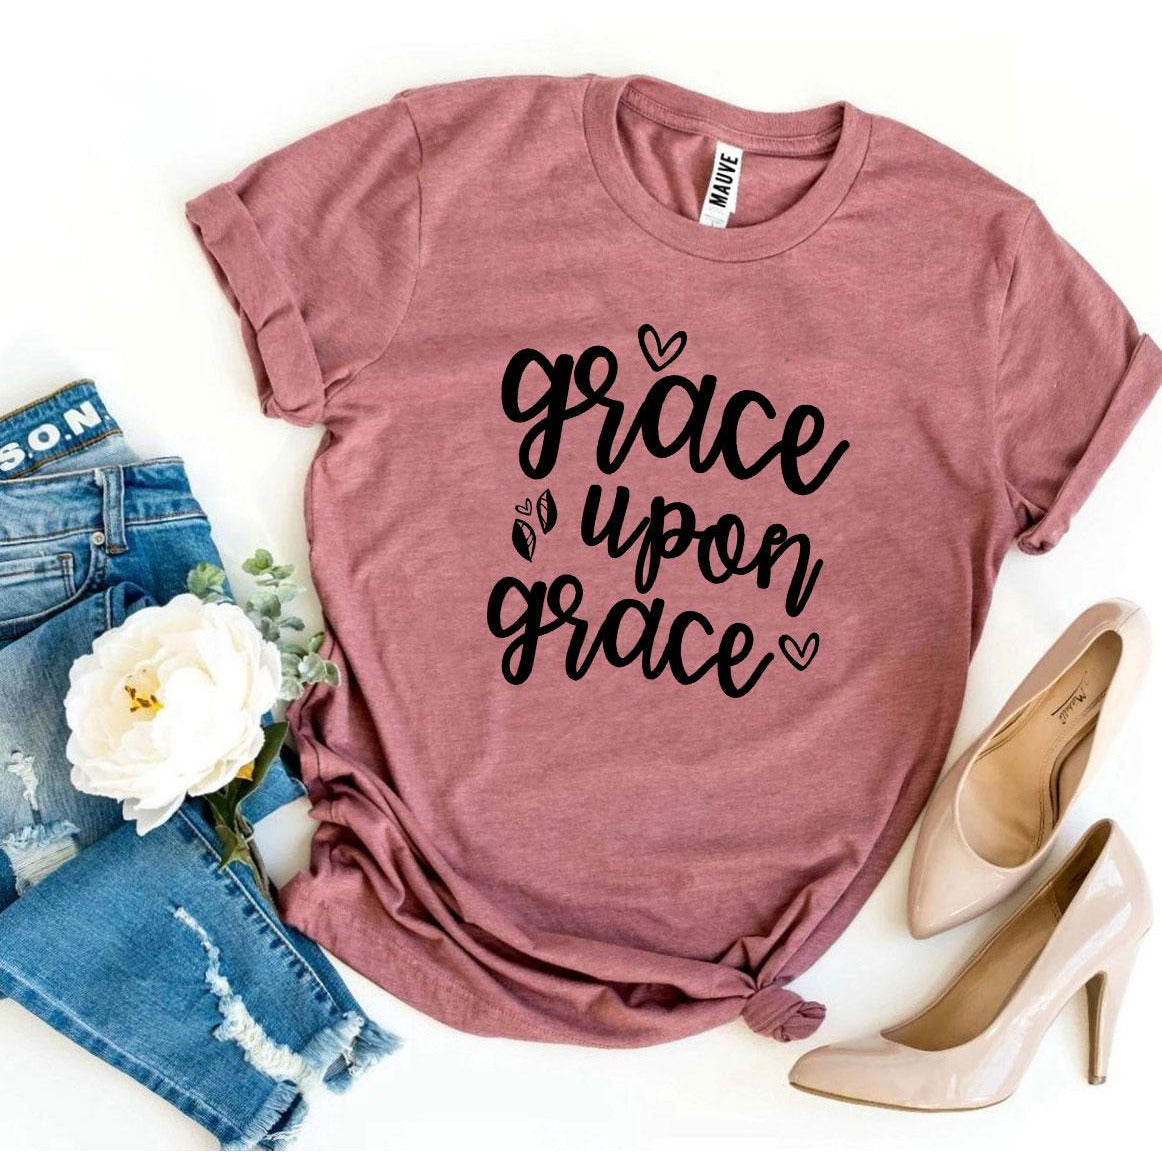 Grace Upon Grace Christian Apparel T-Shirt One Clover Way